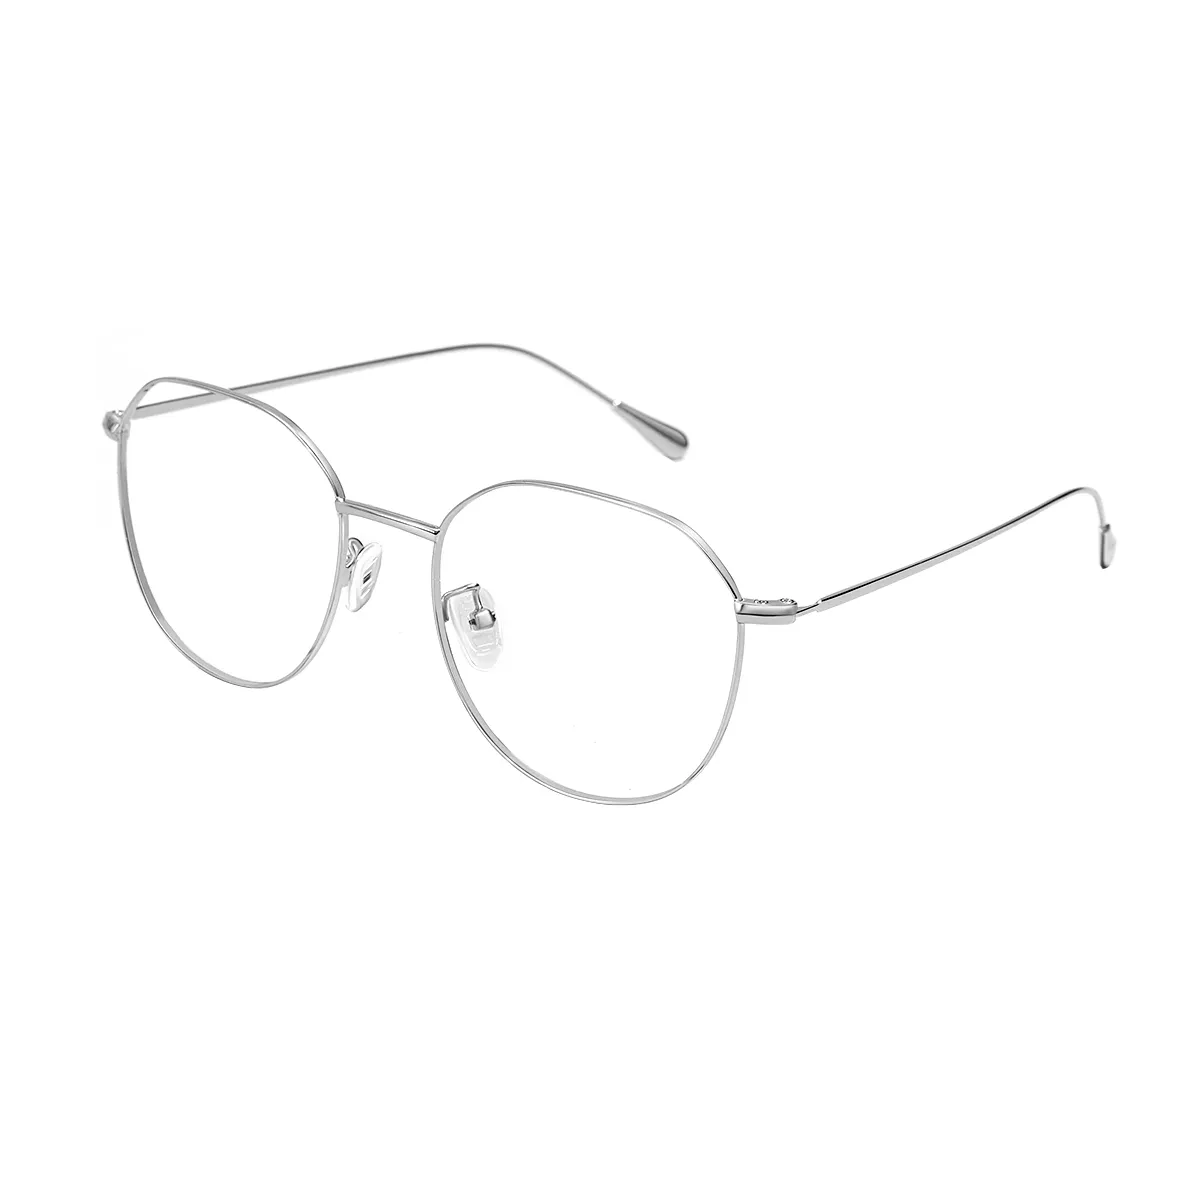 Neville - Round Silver Glasses for Women